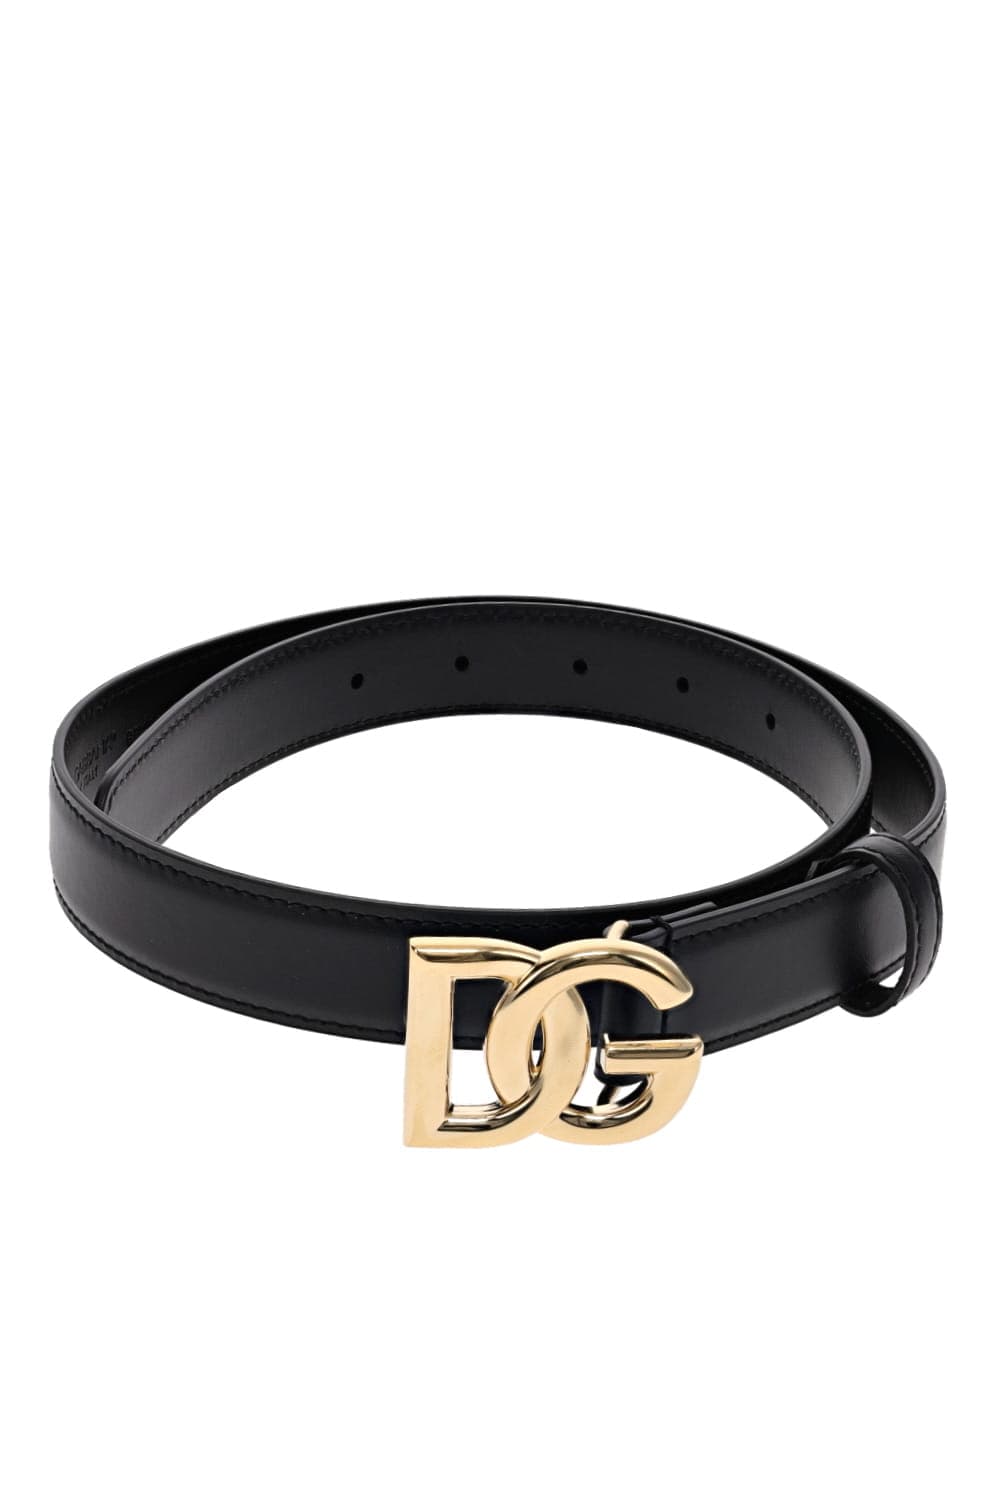 Dolce & Gabbana DG Logo Black Leather Belt